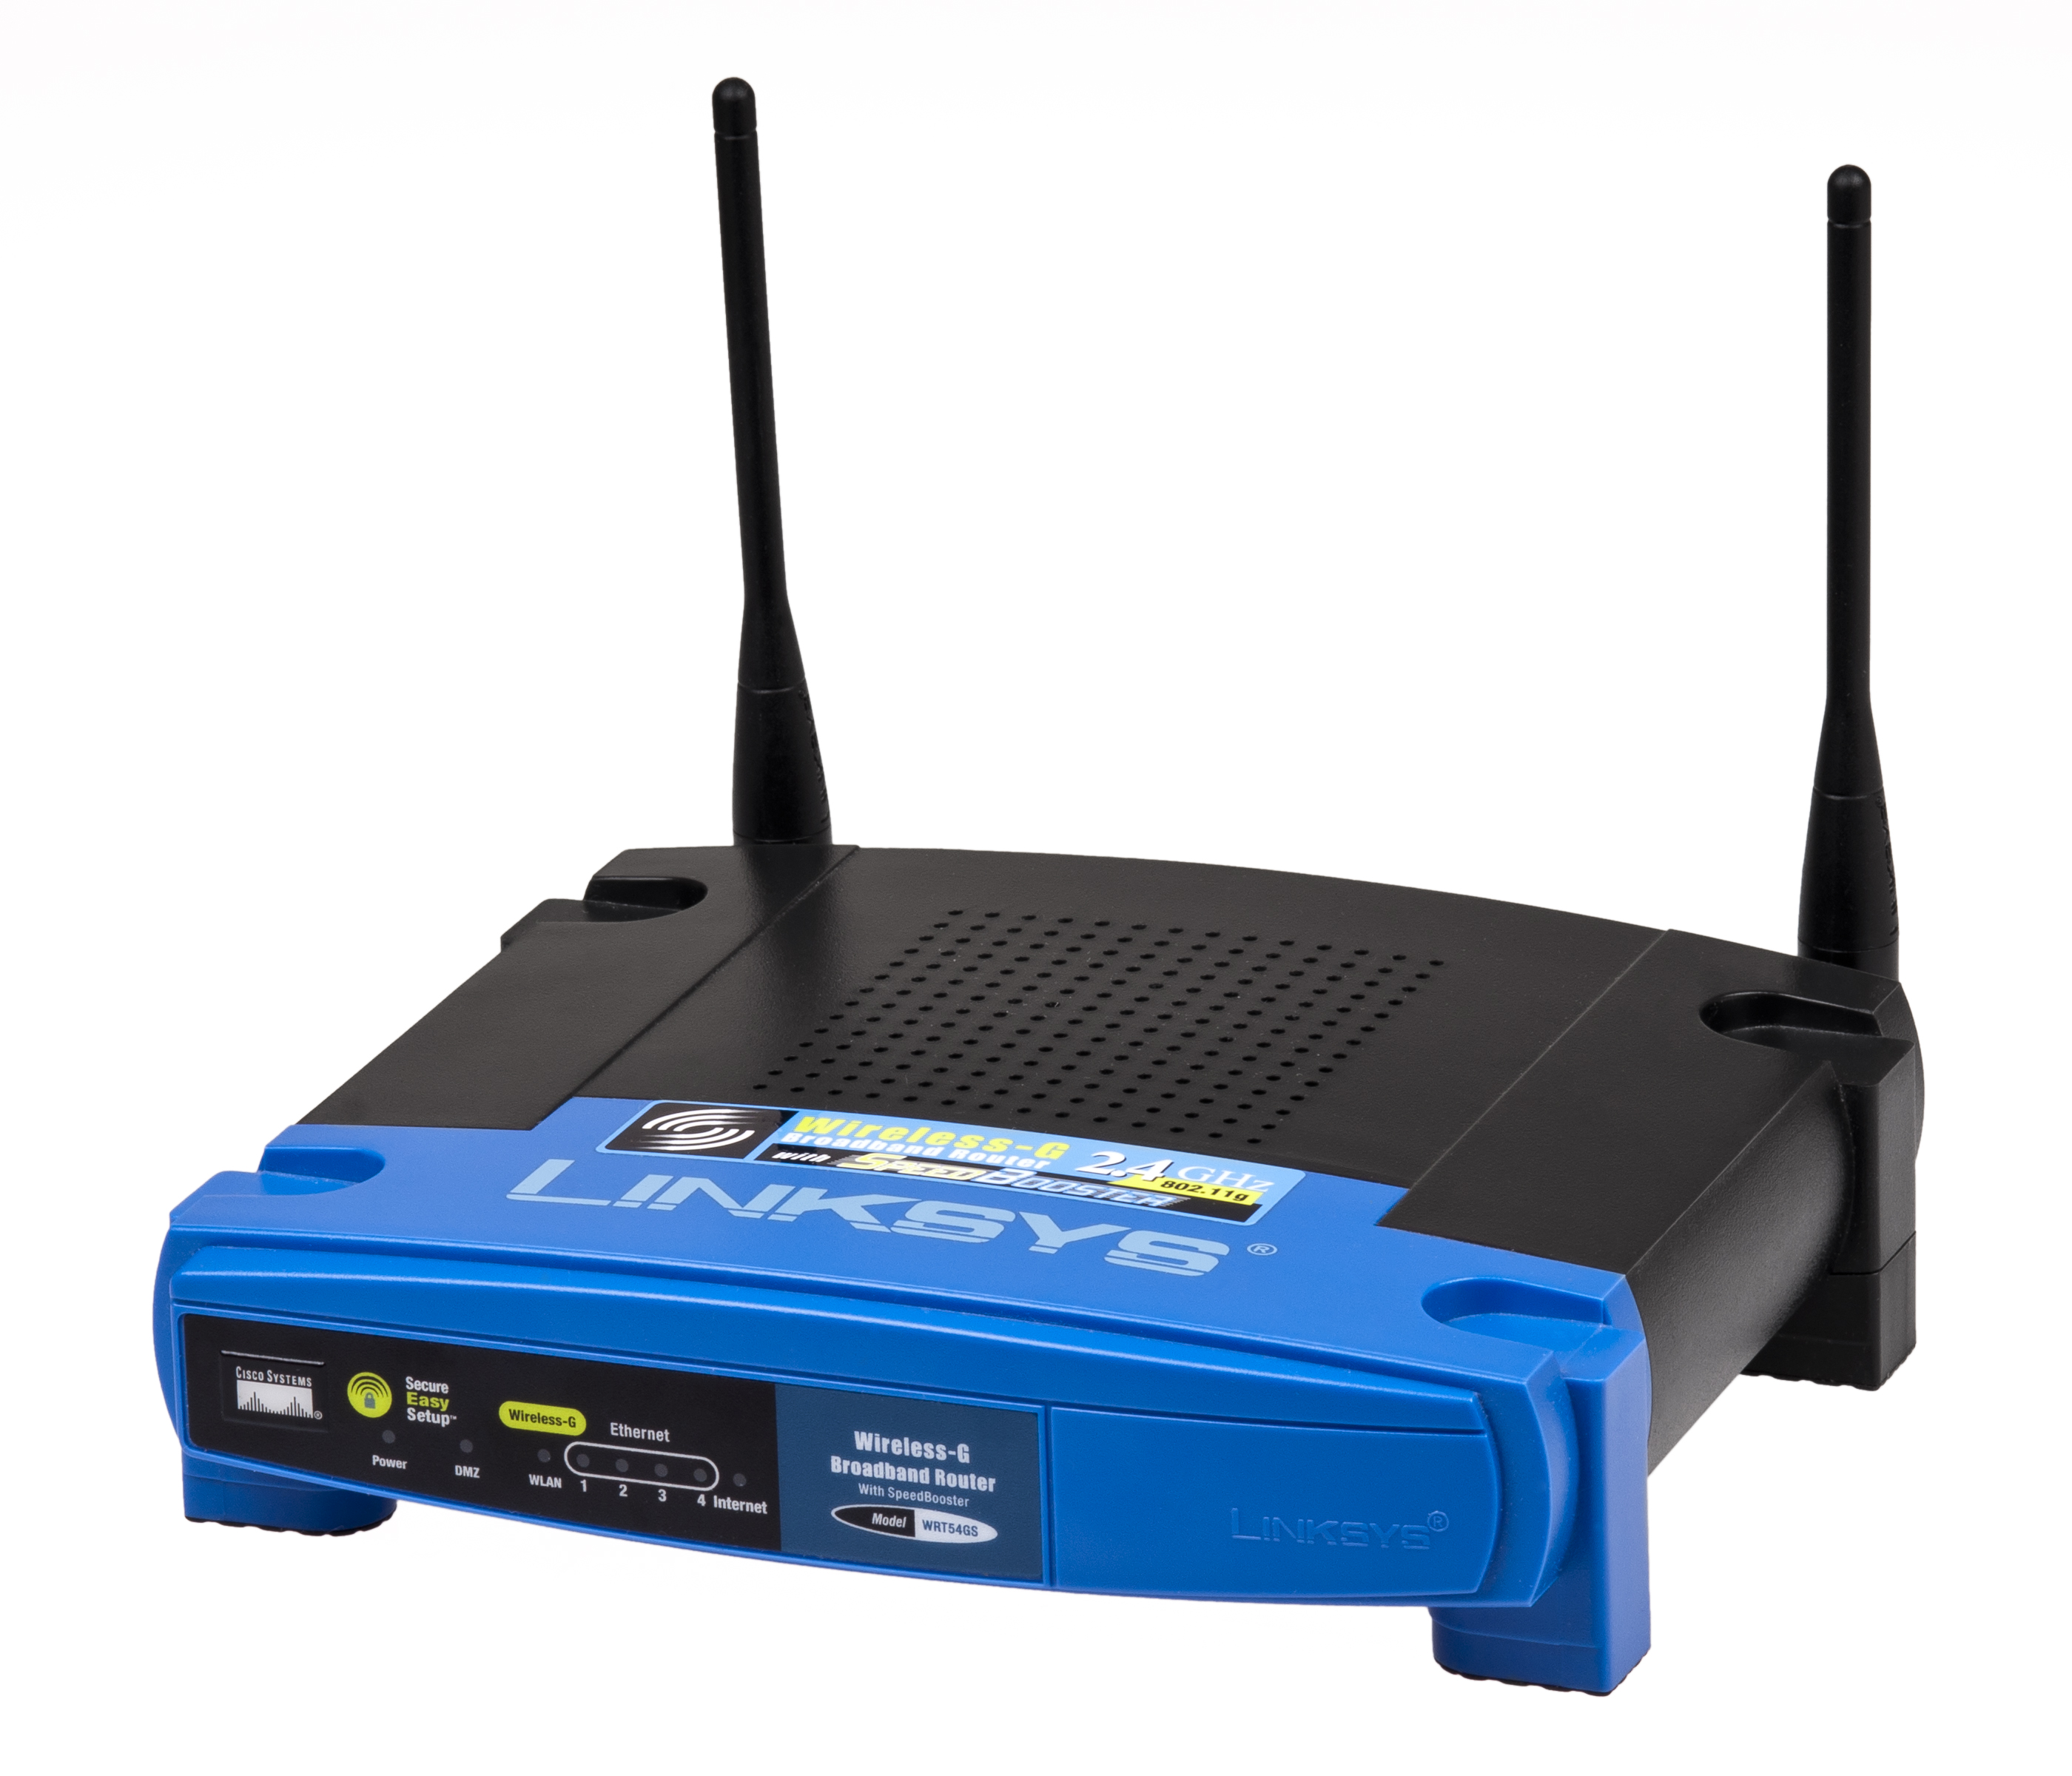 Linksys wireless-G router, model WRT54GS